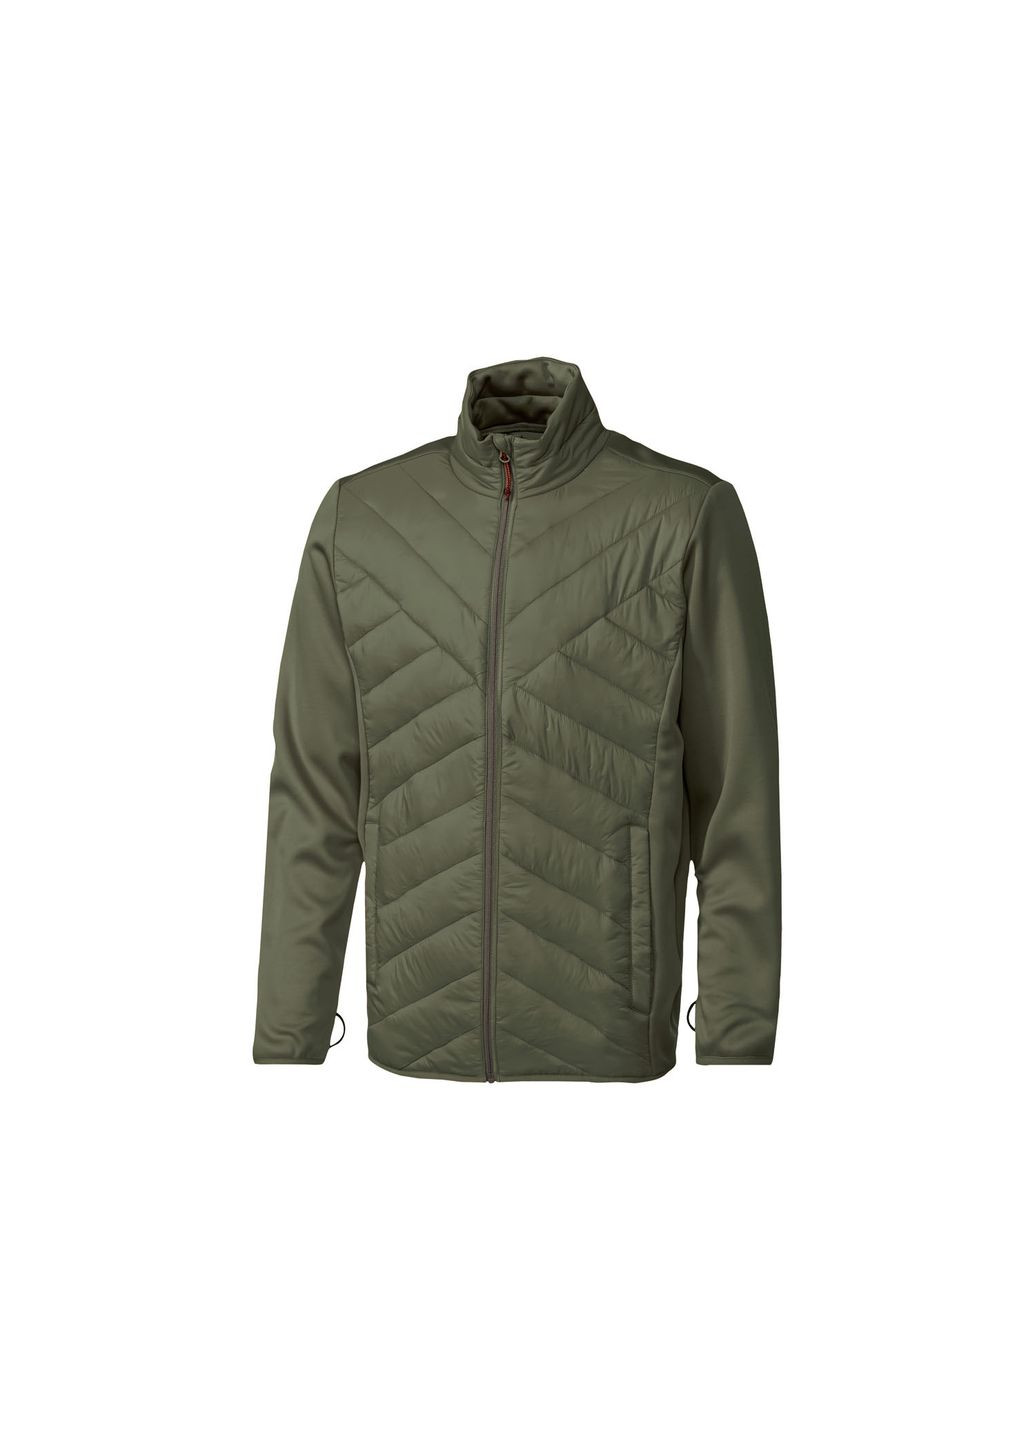 Оливковая (хаки) демисезонная куртка демисезонная комбинированная softshell / софтшелл для мужчины 498774 ROCKTRAIL